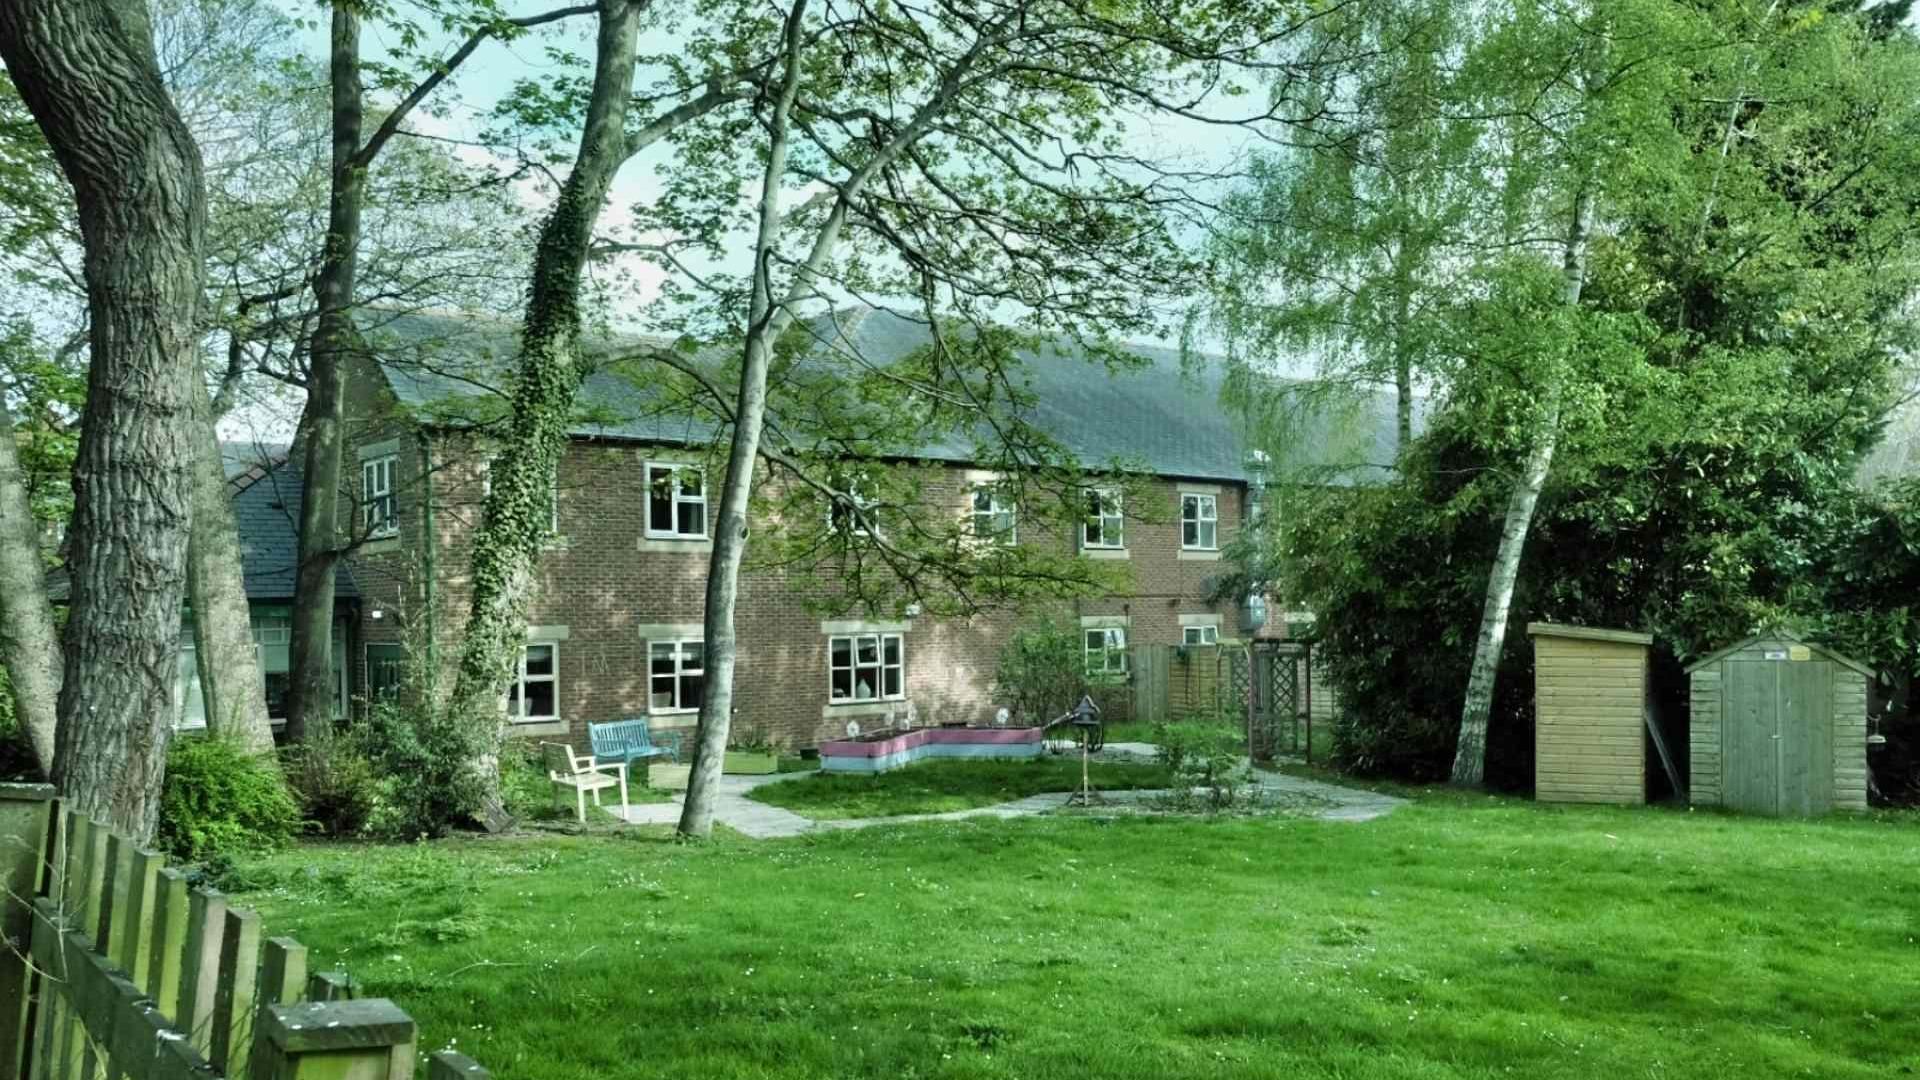 eckington court nursing home near sheffield